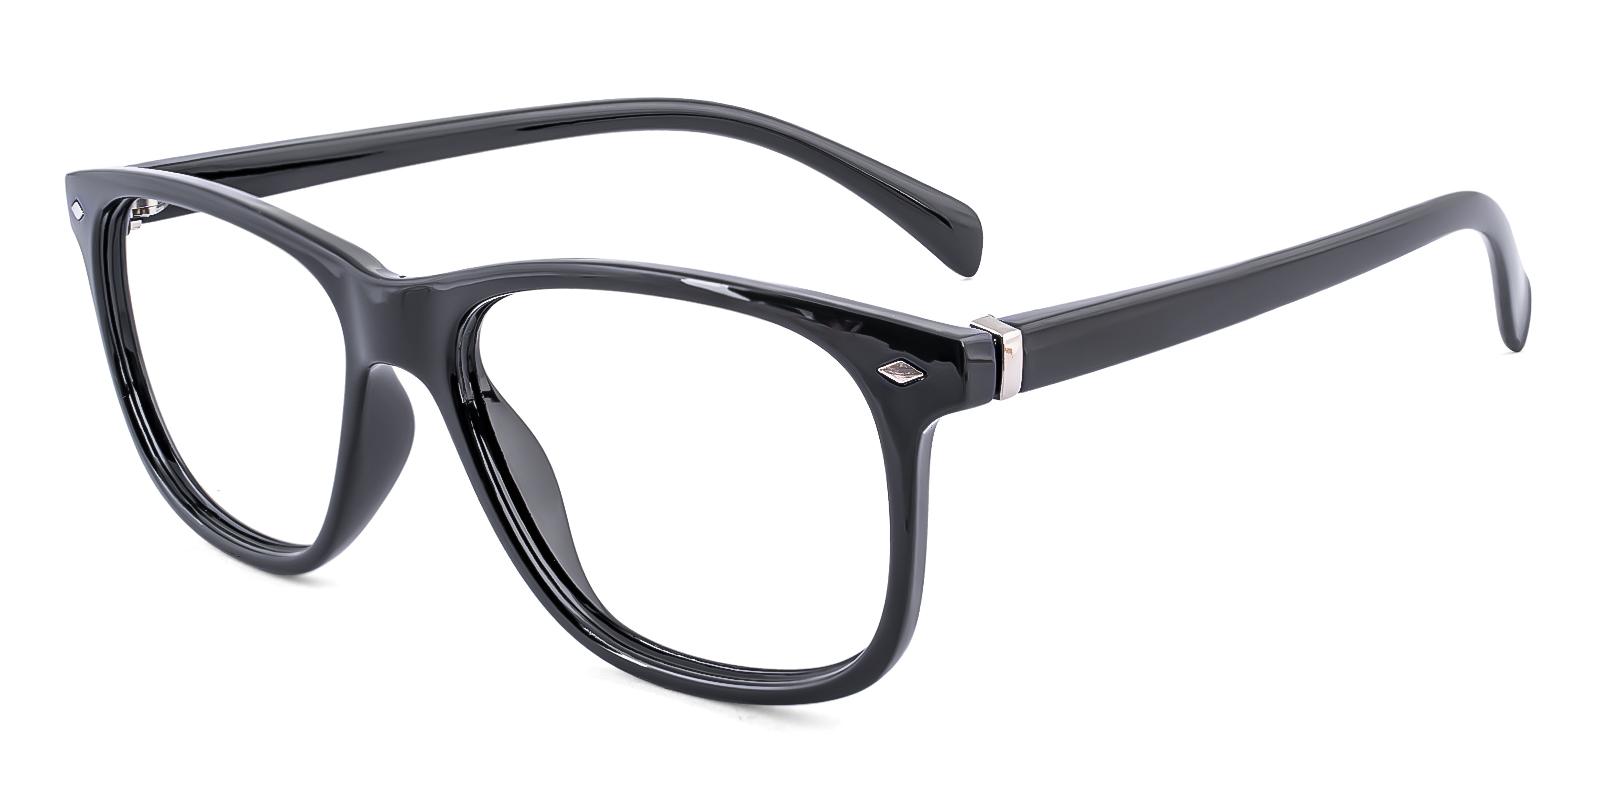 Dicly Black Plastic Eyeglasses , UniversalBridgeFit Frames from ABBE Glasses